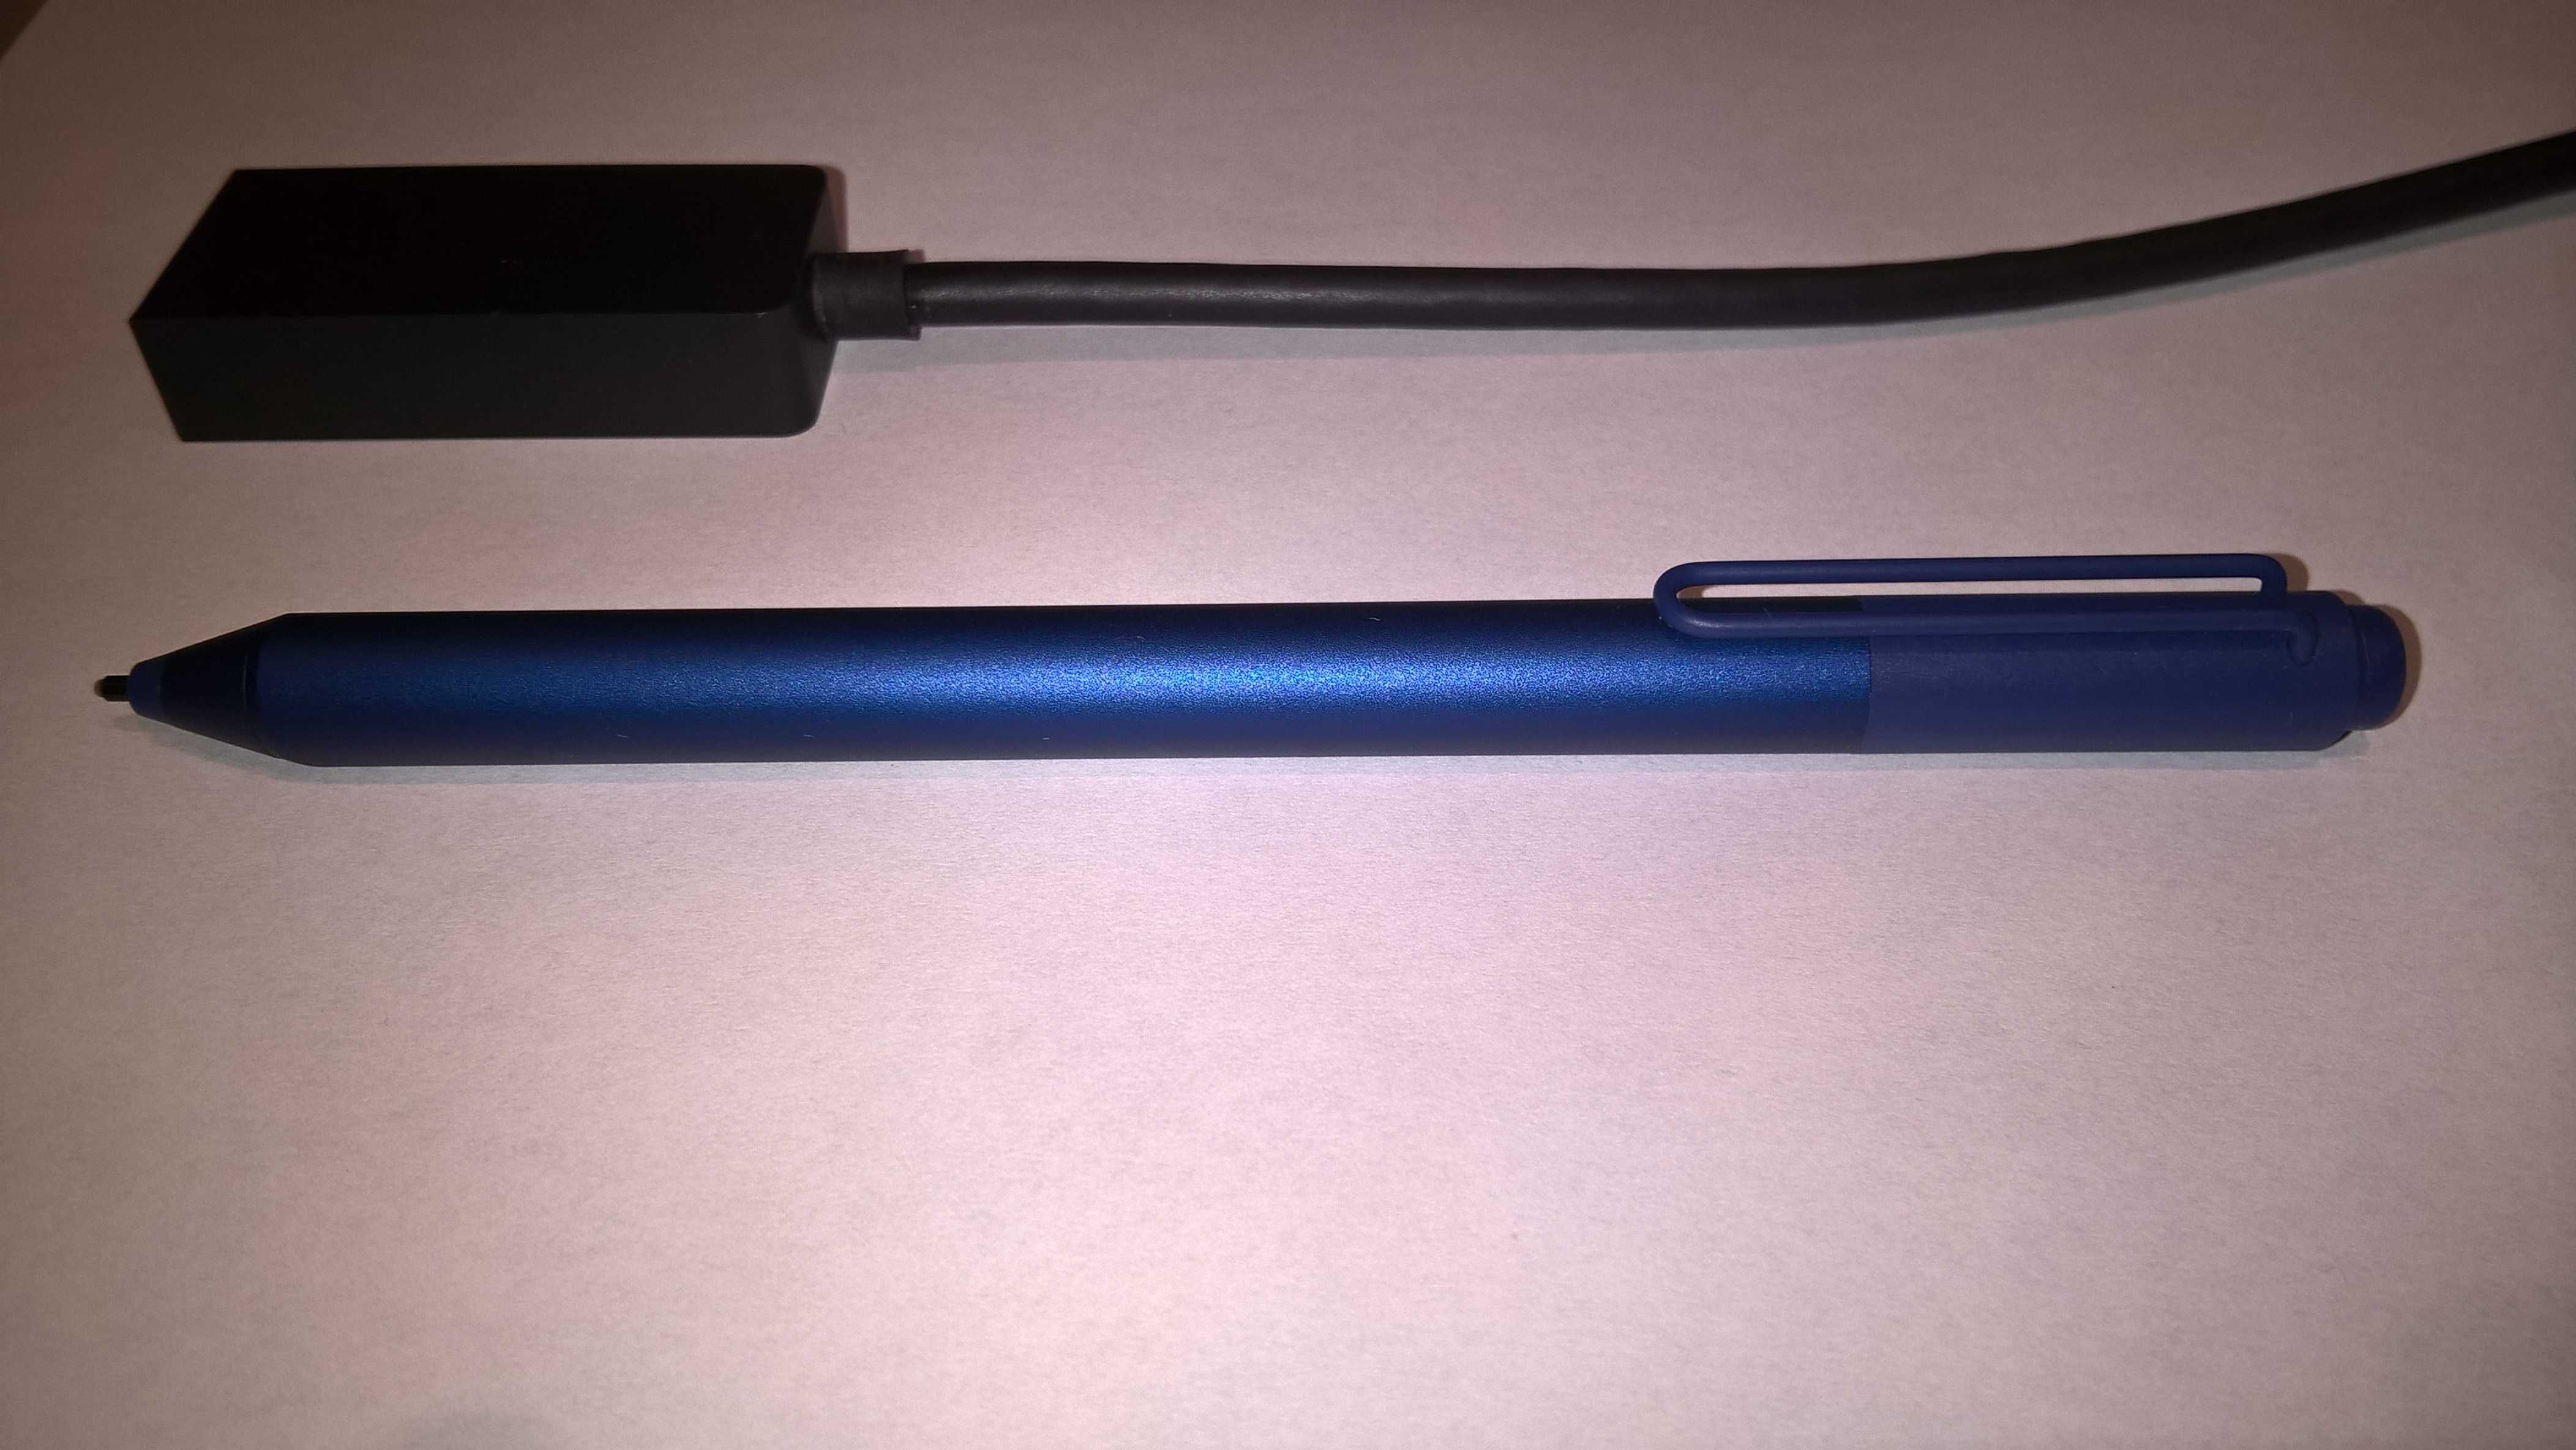 Zestaw/Nowe: Surface pen z końcówkami + Adapter Mini DisplayPort-HDMI